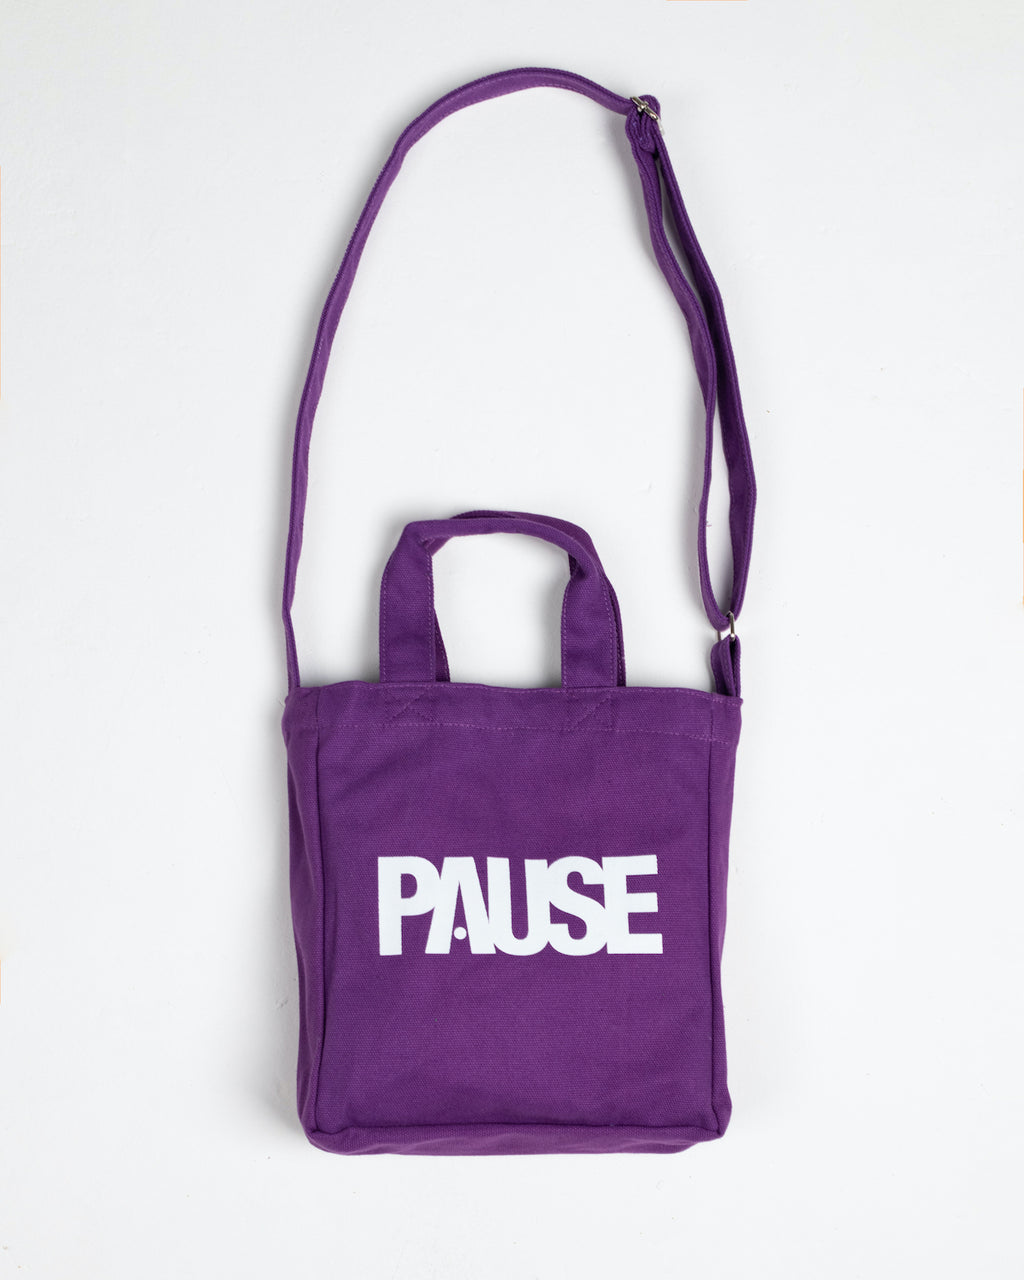 PAUSE 'GRAPE' Mini Tote Bag